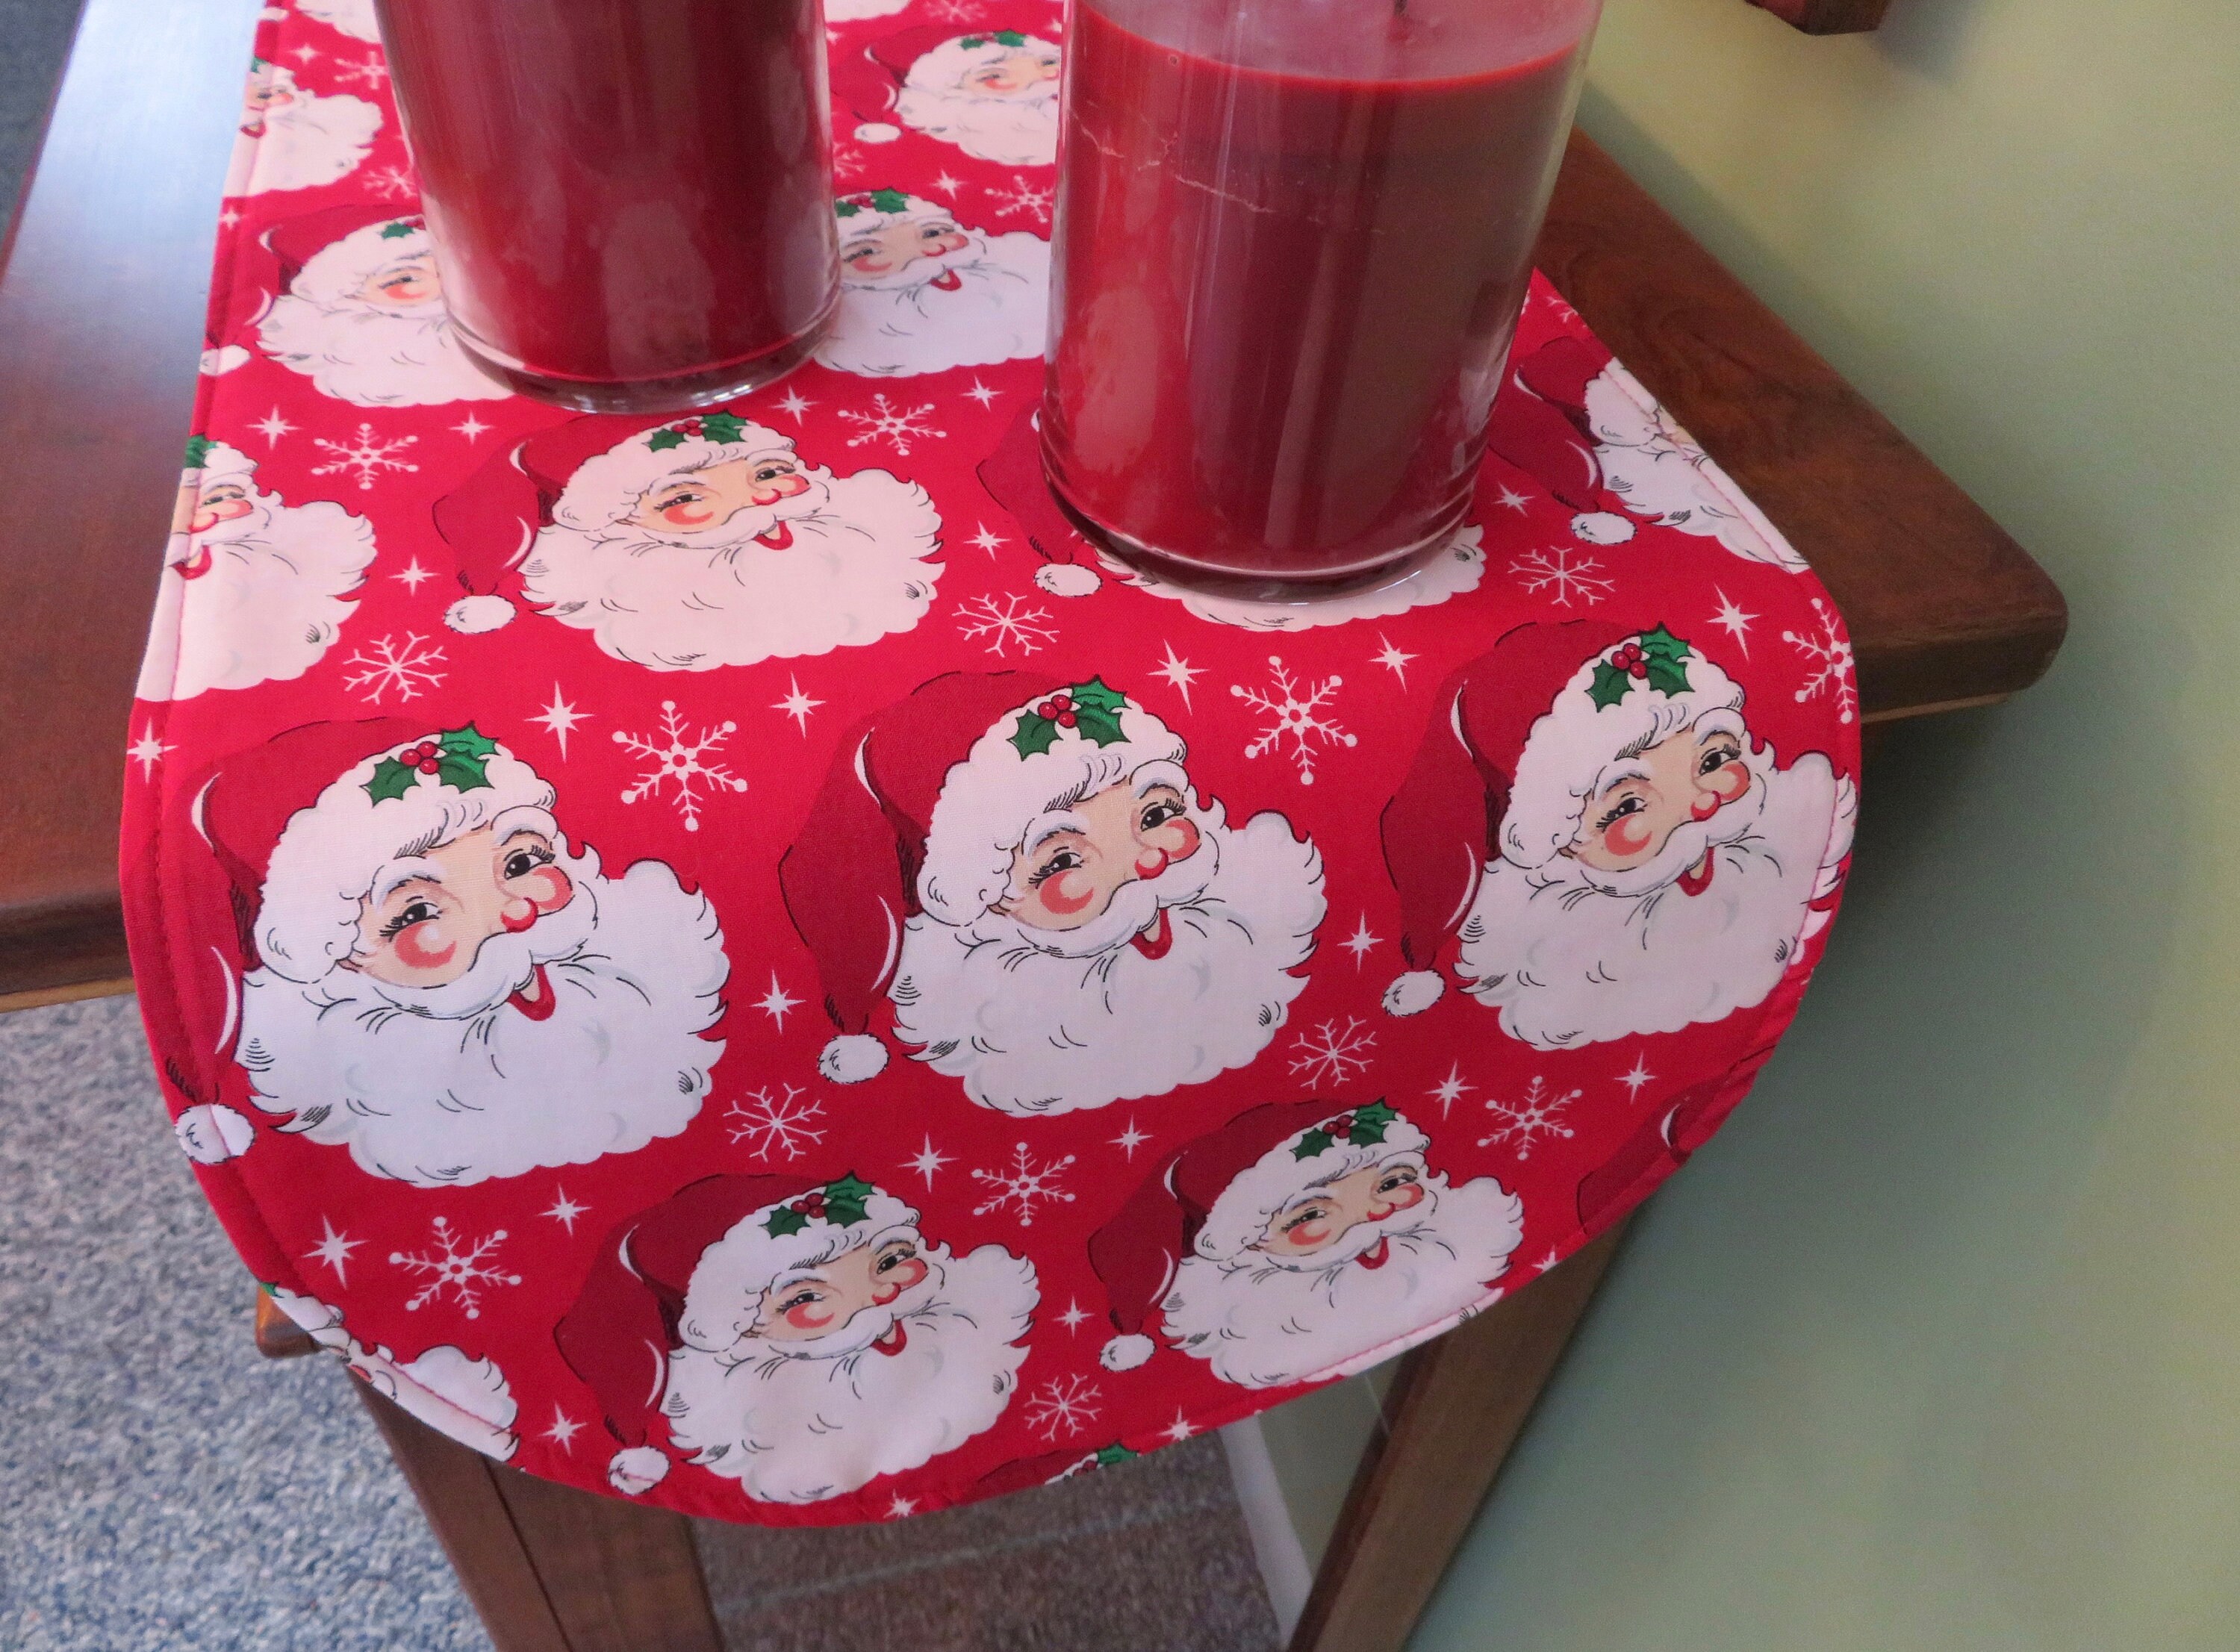 Christmas Tree Santa Claus Candy Snowflake Table Runner Decoration